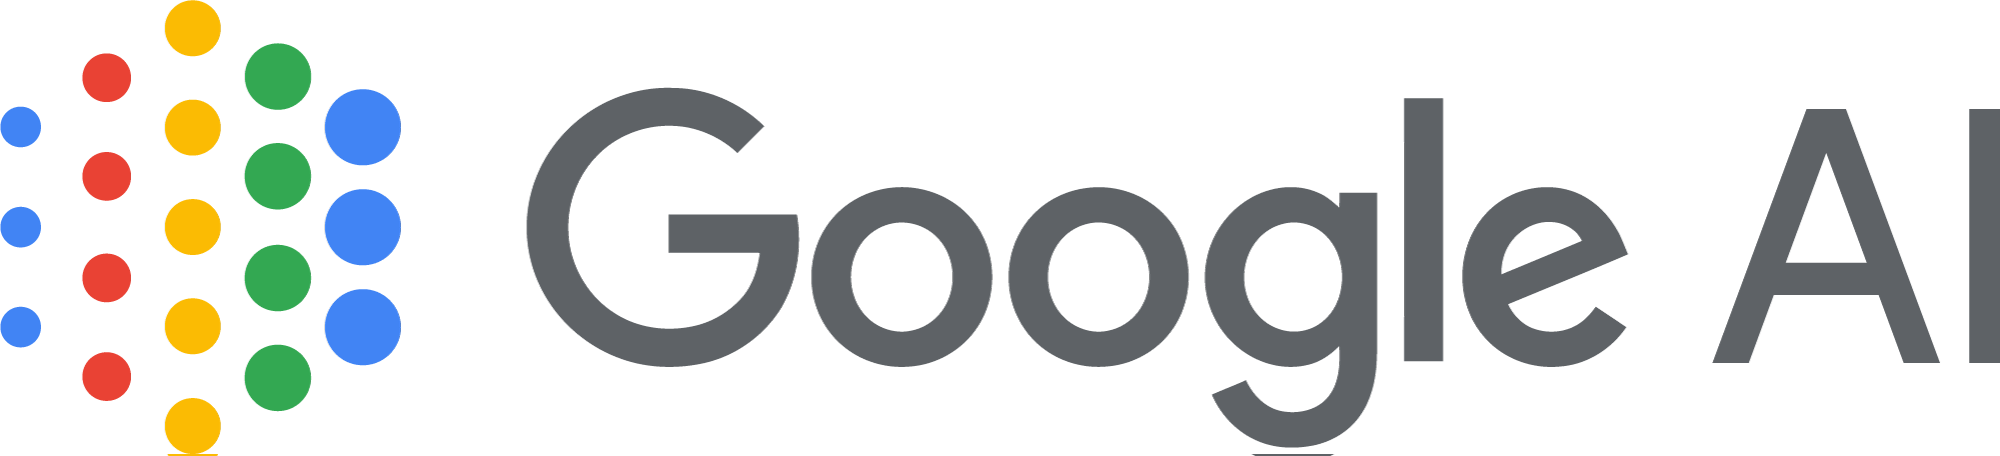 Google ai logo